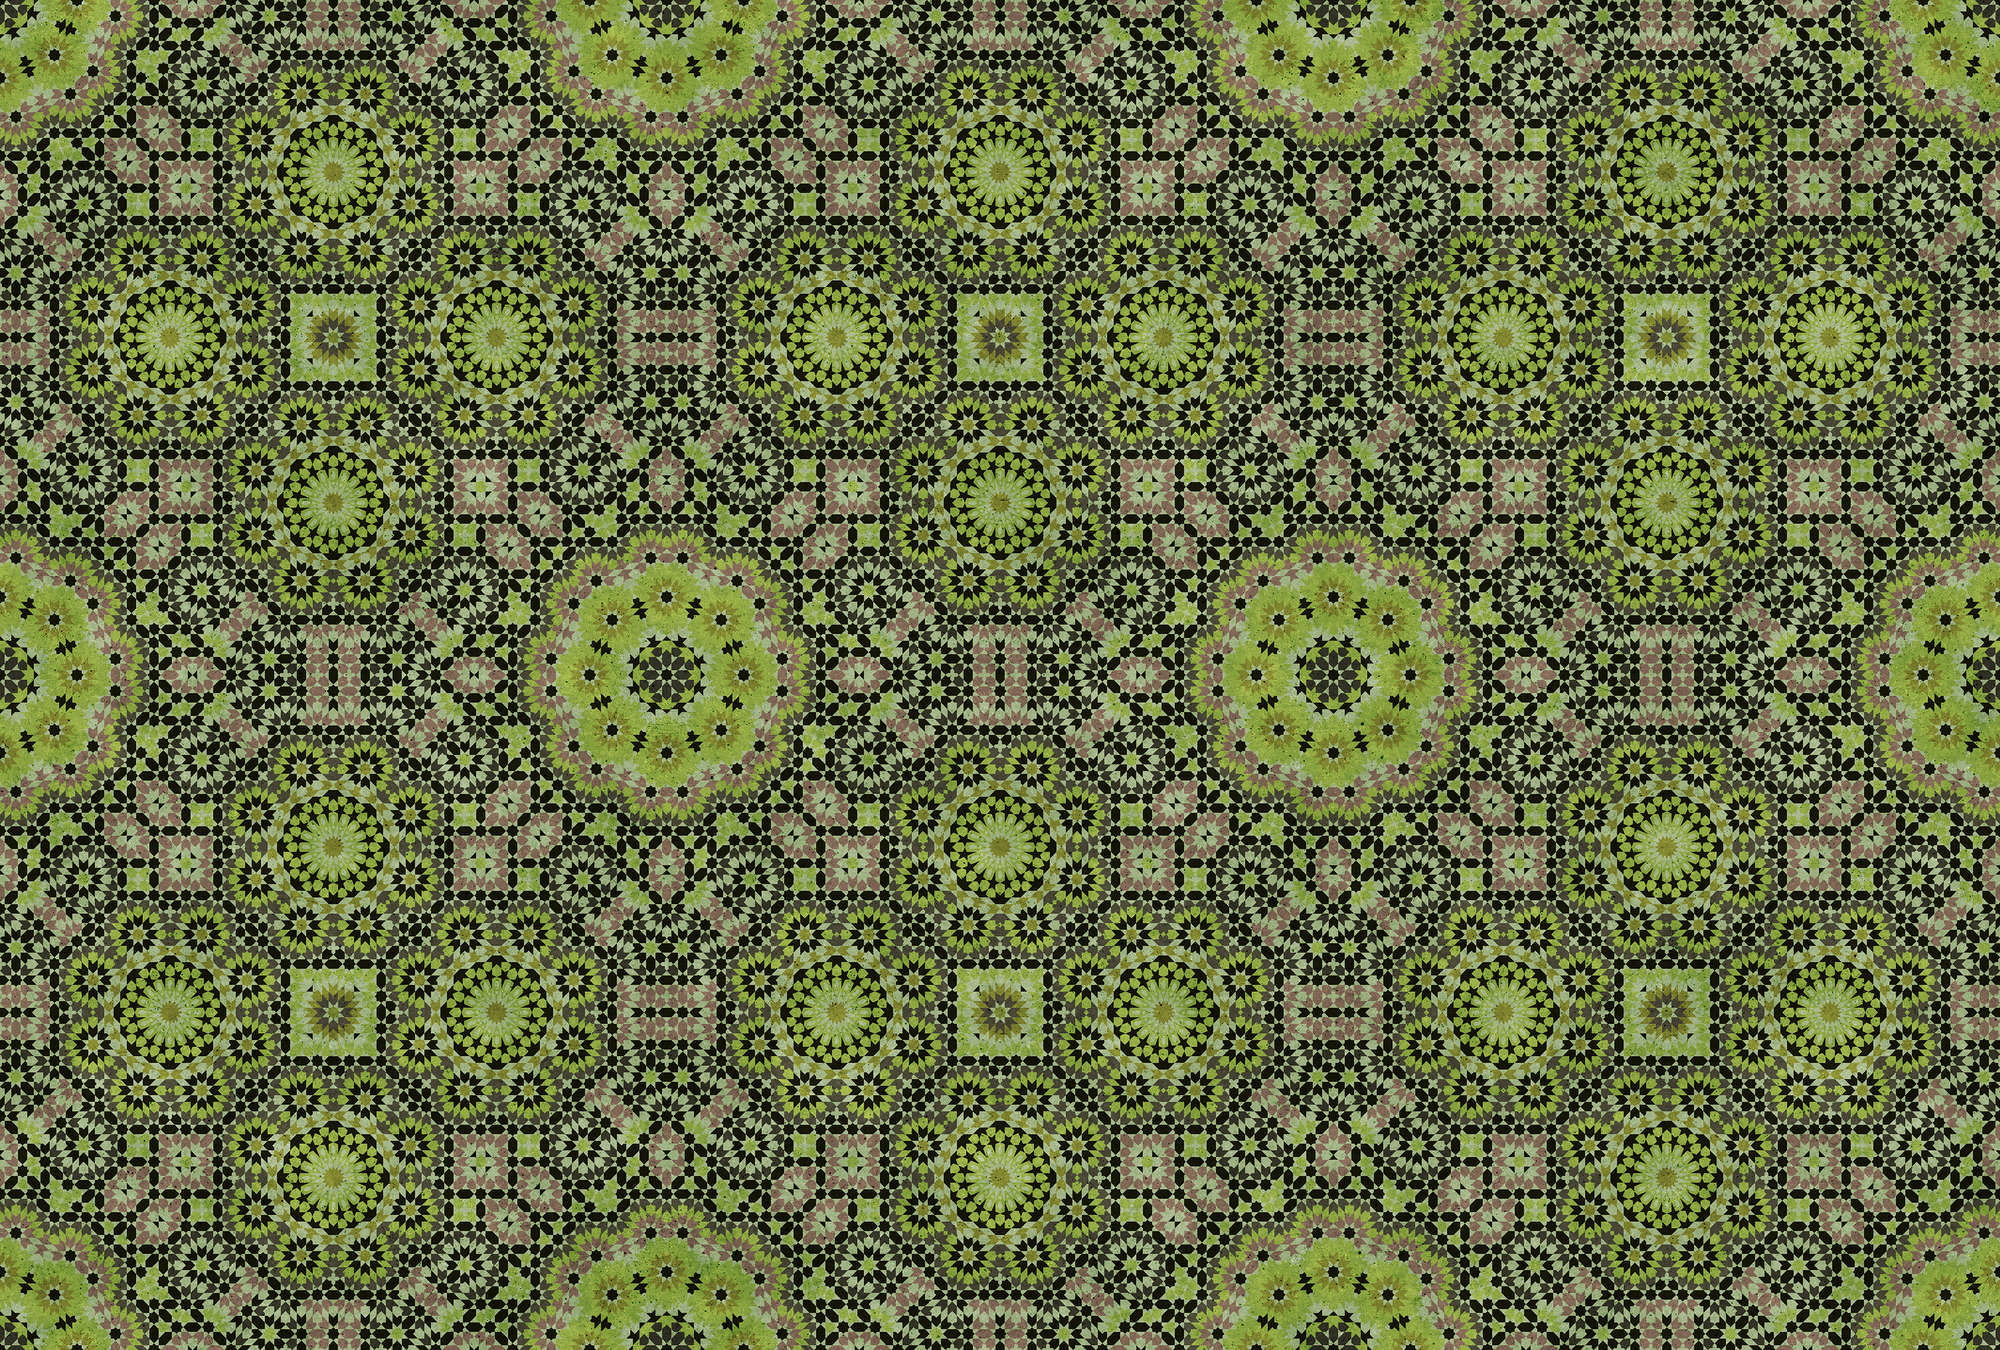             Green mosaic graphic pattern wallpaper
        